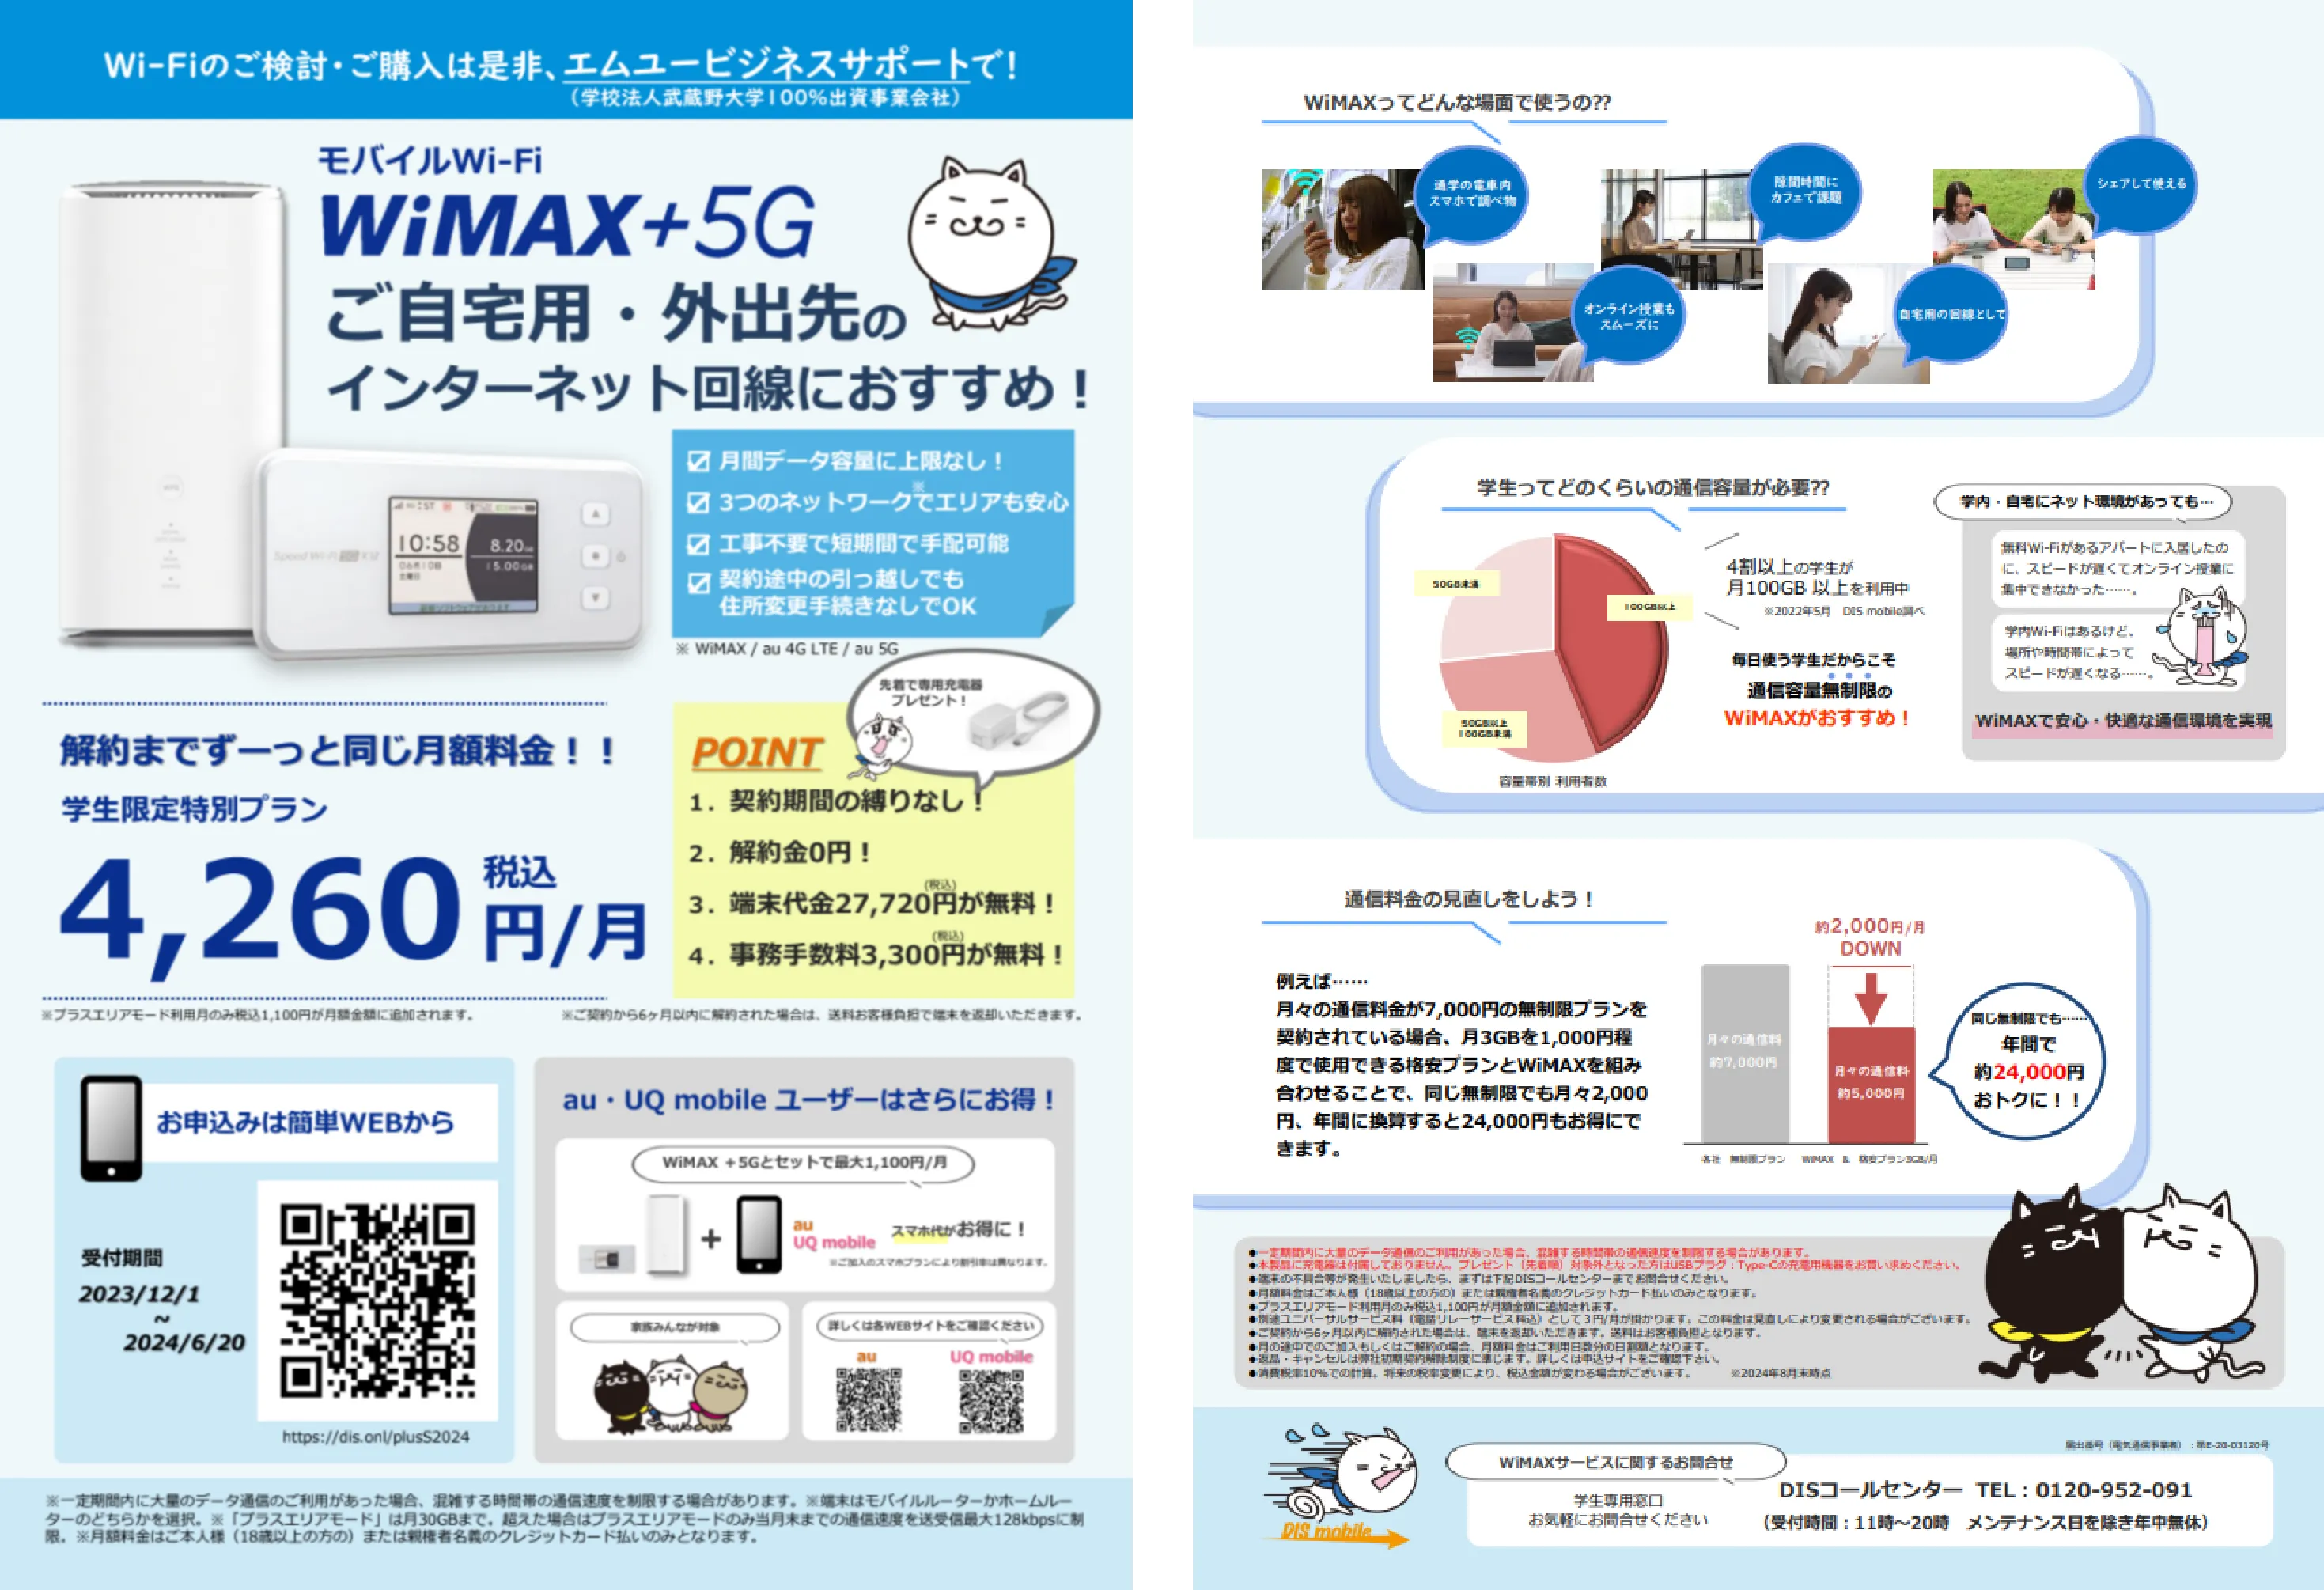 WiMAX+5G チラシ